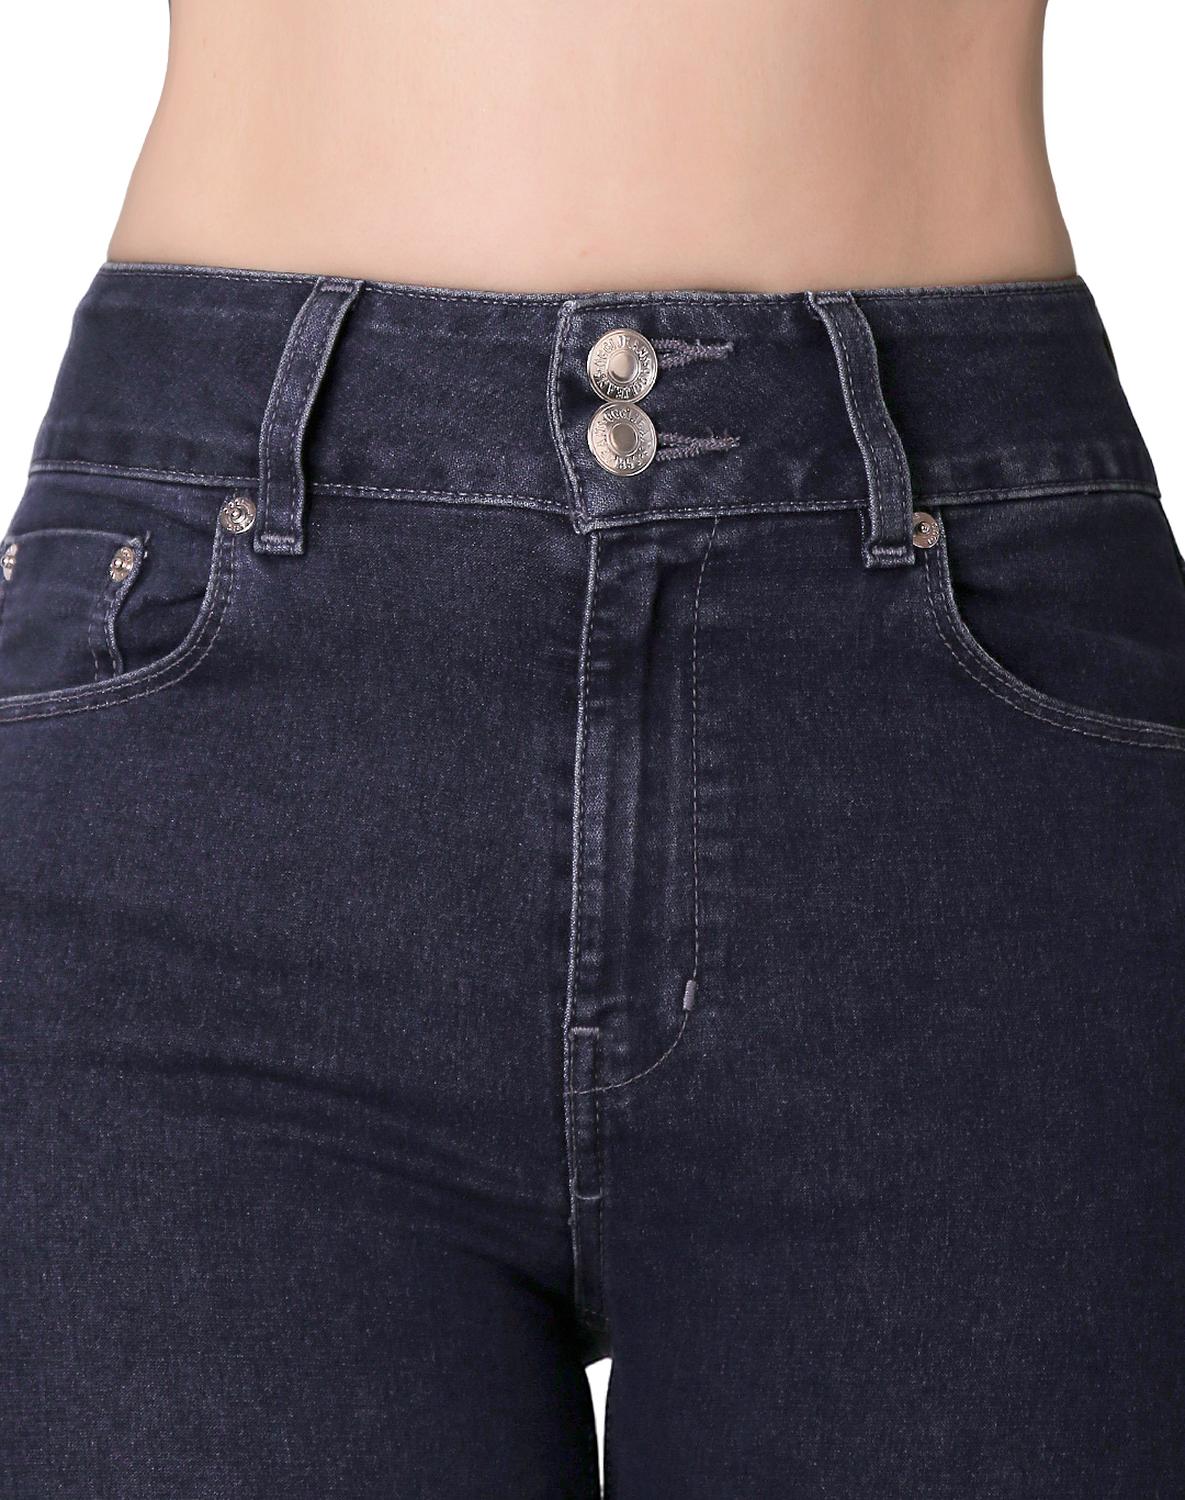 Jeans Básico Mujer Oggi Satin 59102091 Mezclilla Stretch